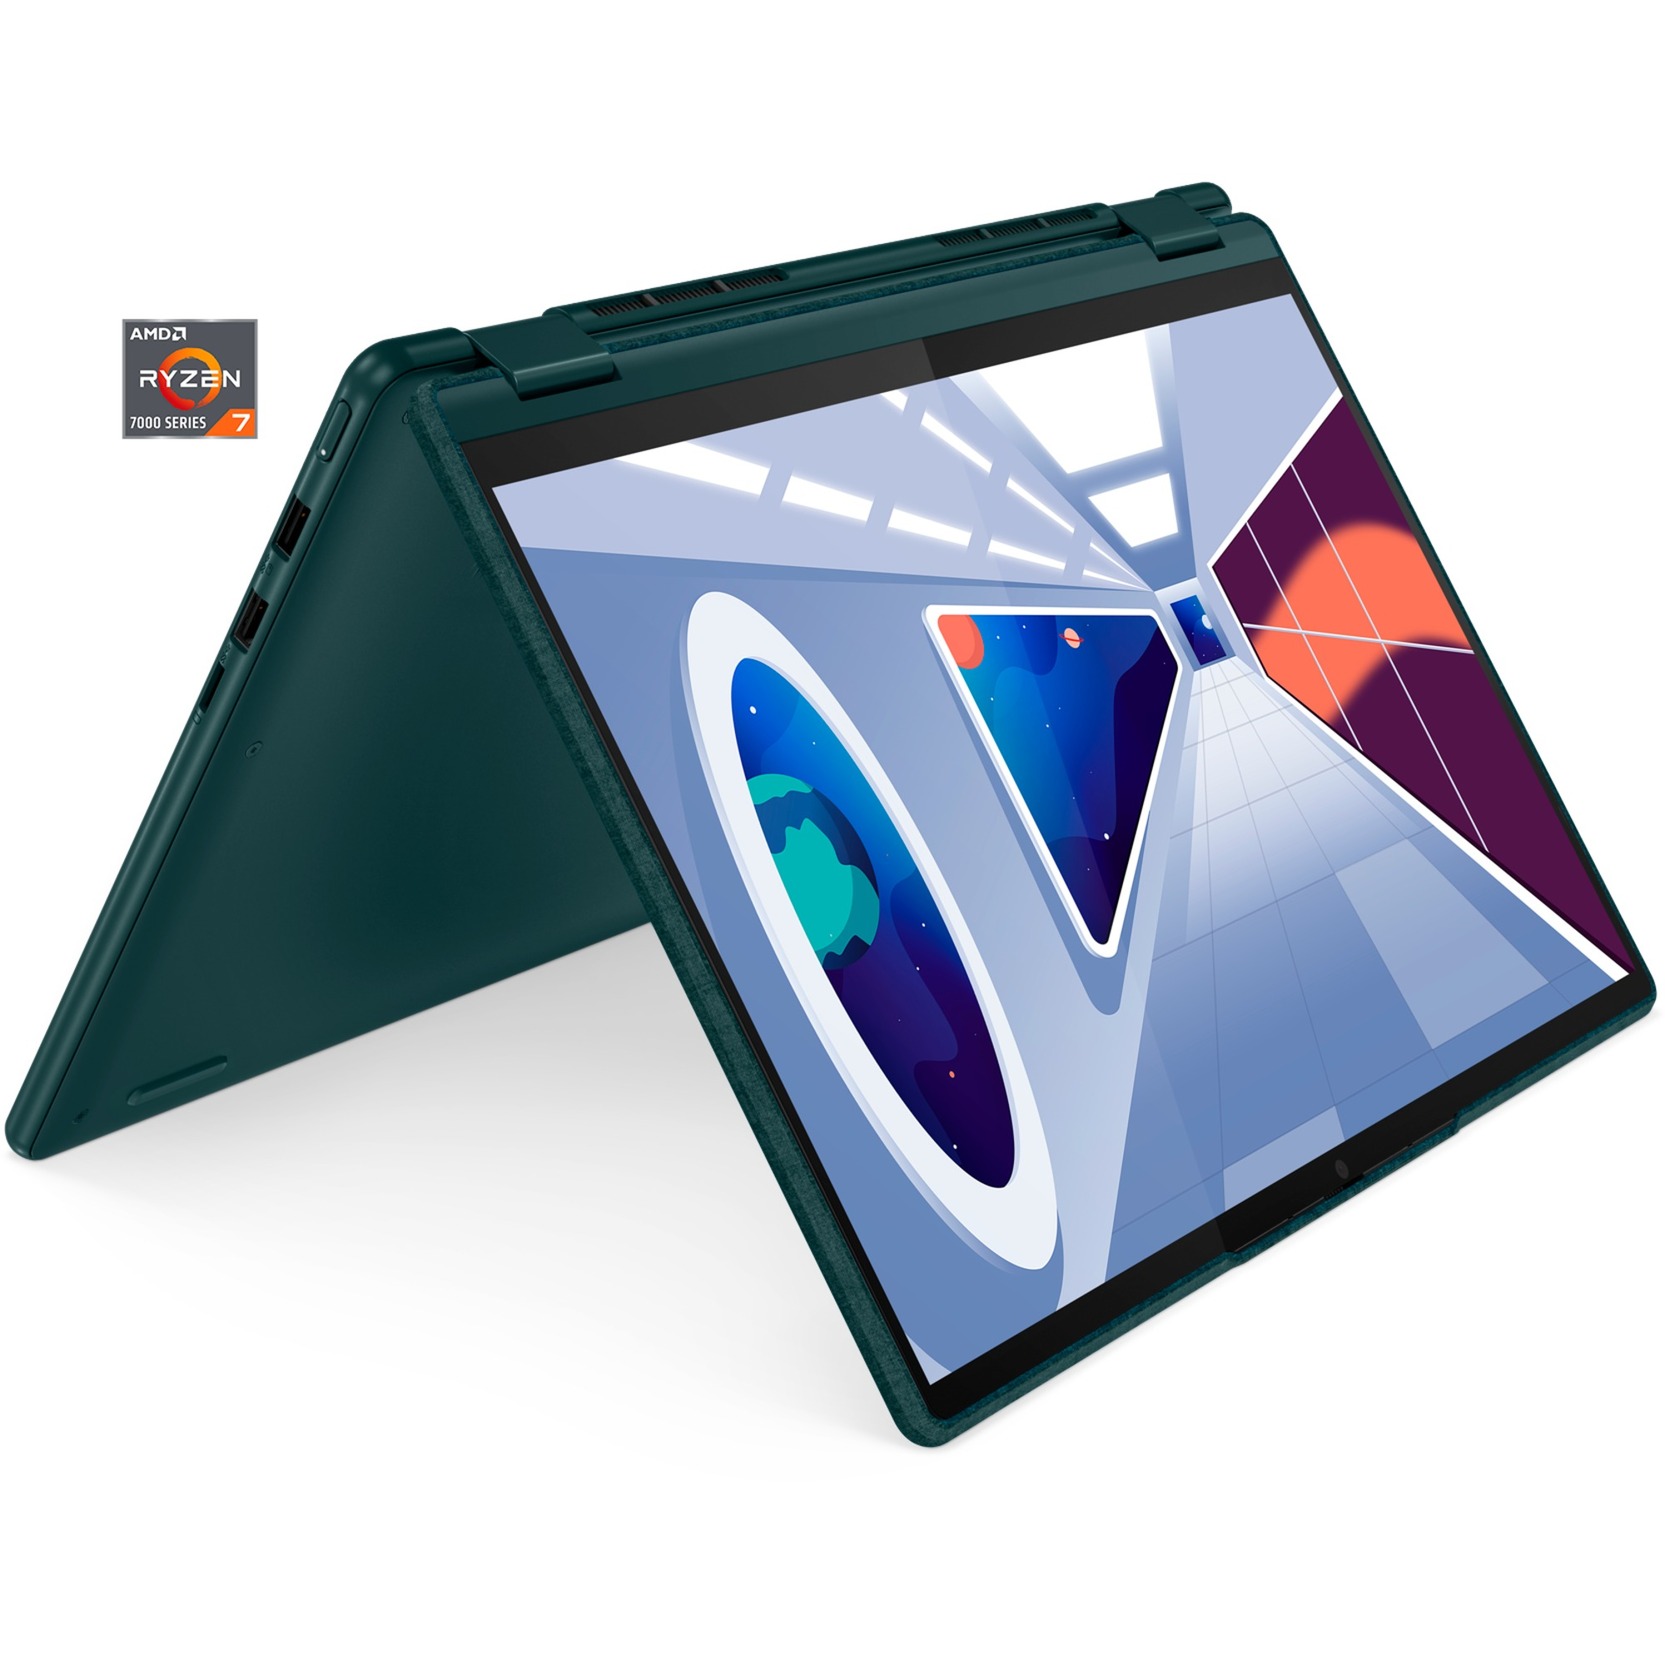 Yoga 6 (83B2001SGE), Notebook von Lenovo